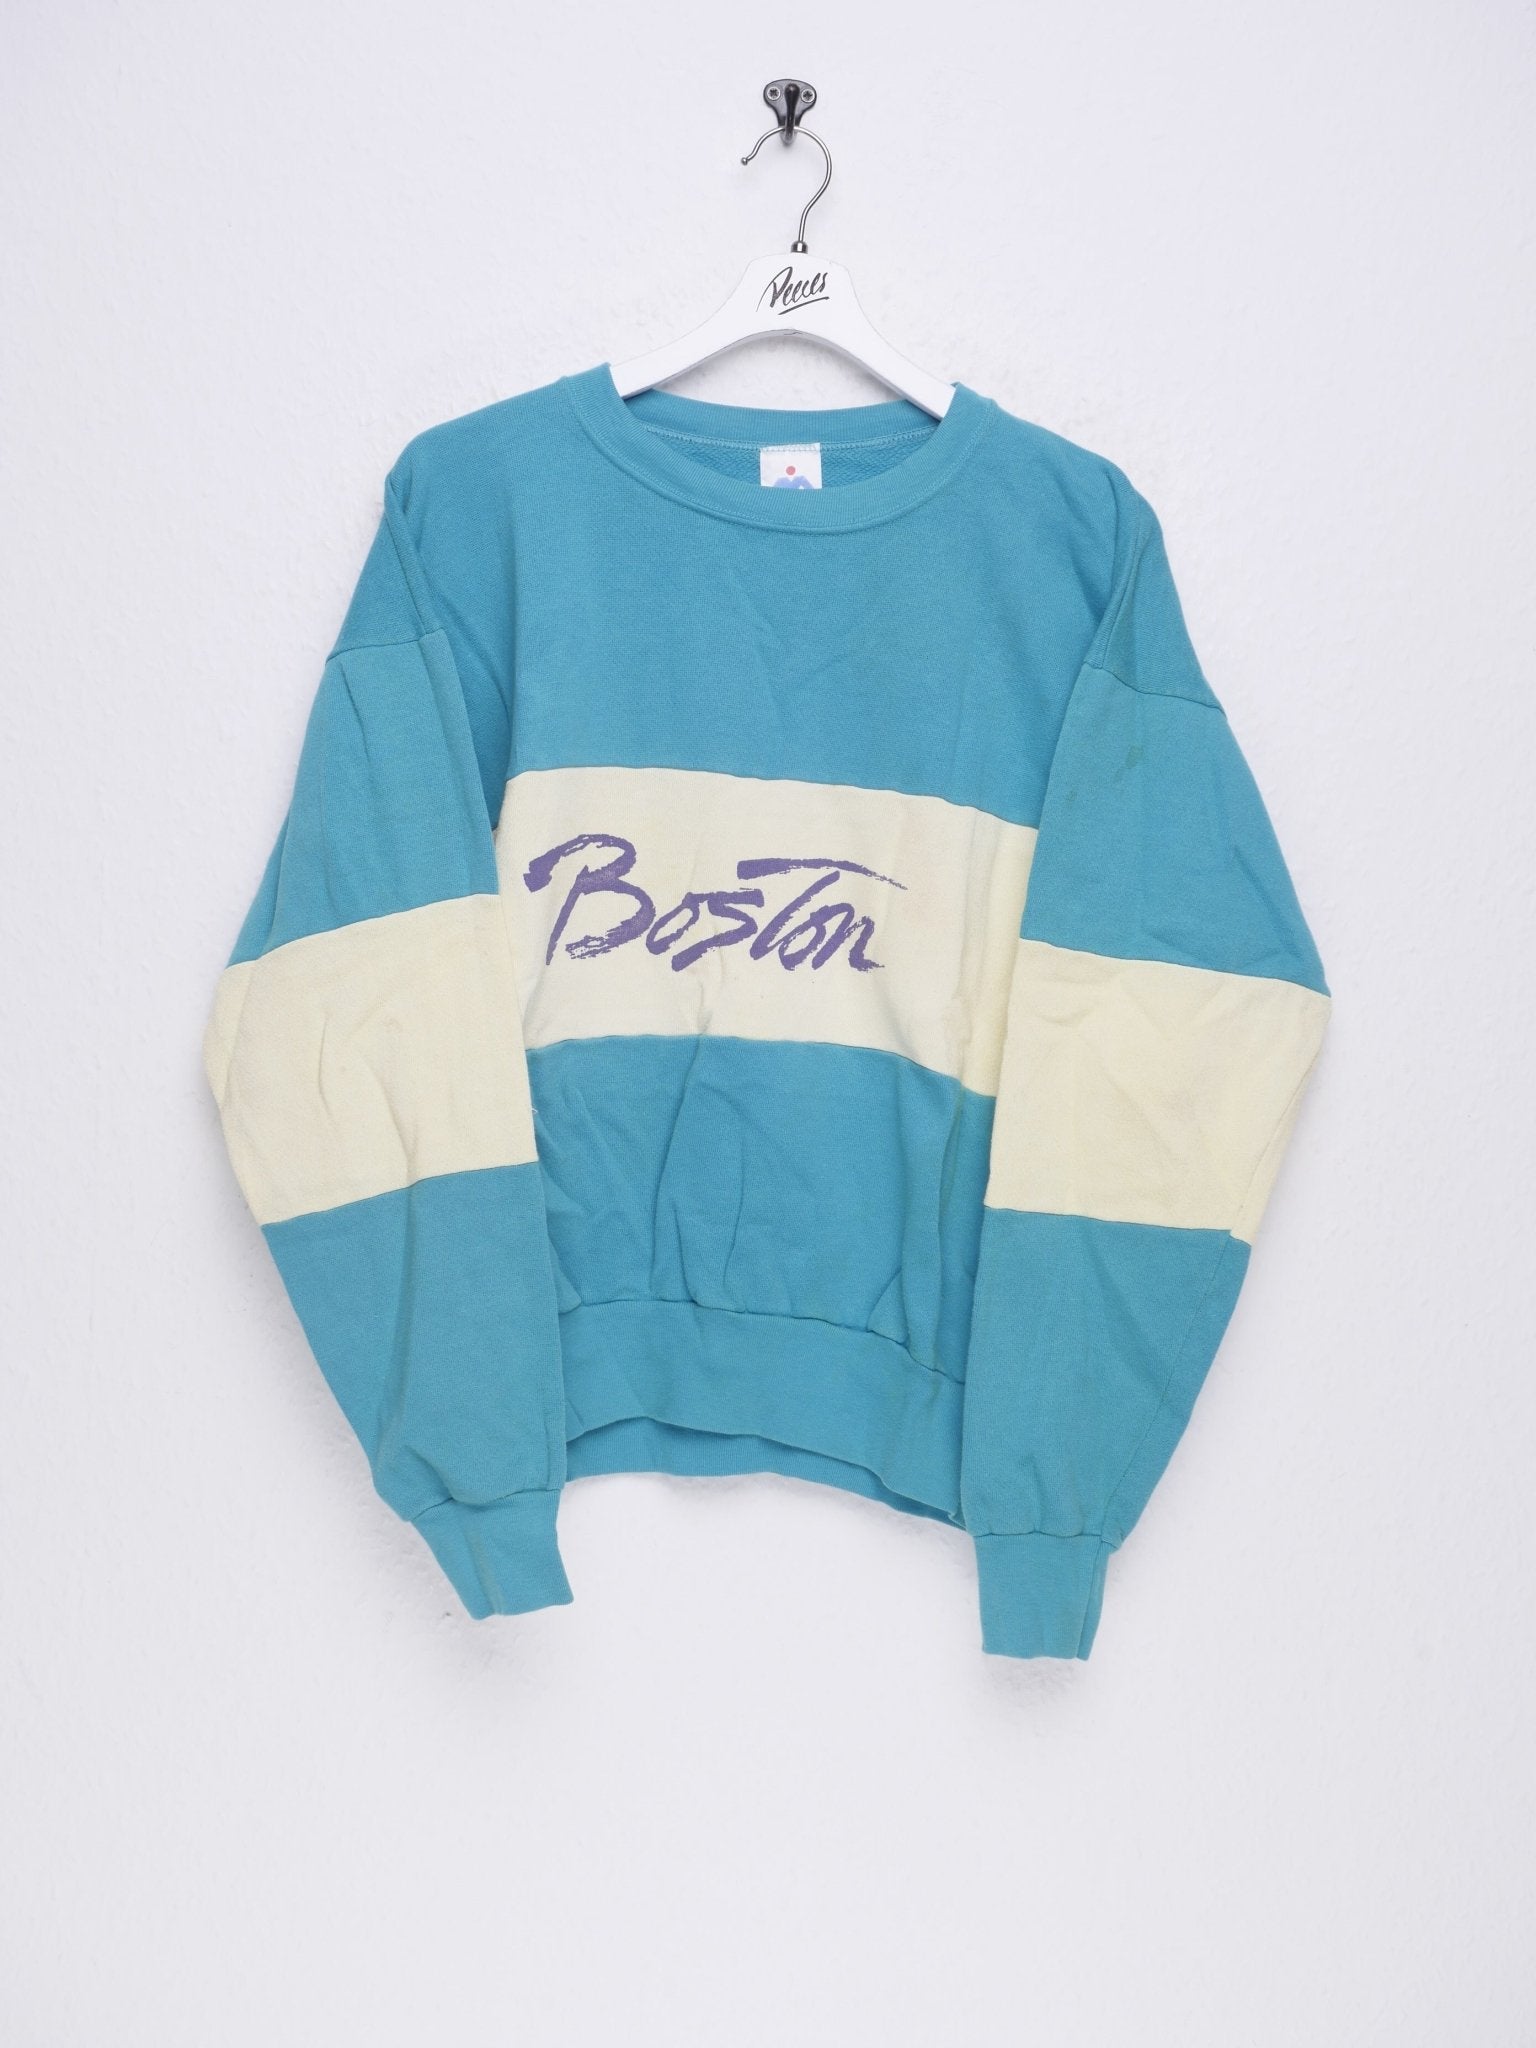 Boston printed Spellout Vintage Sweater - Peeces